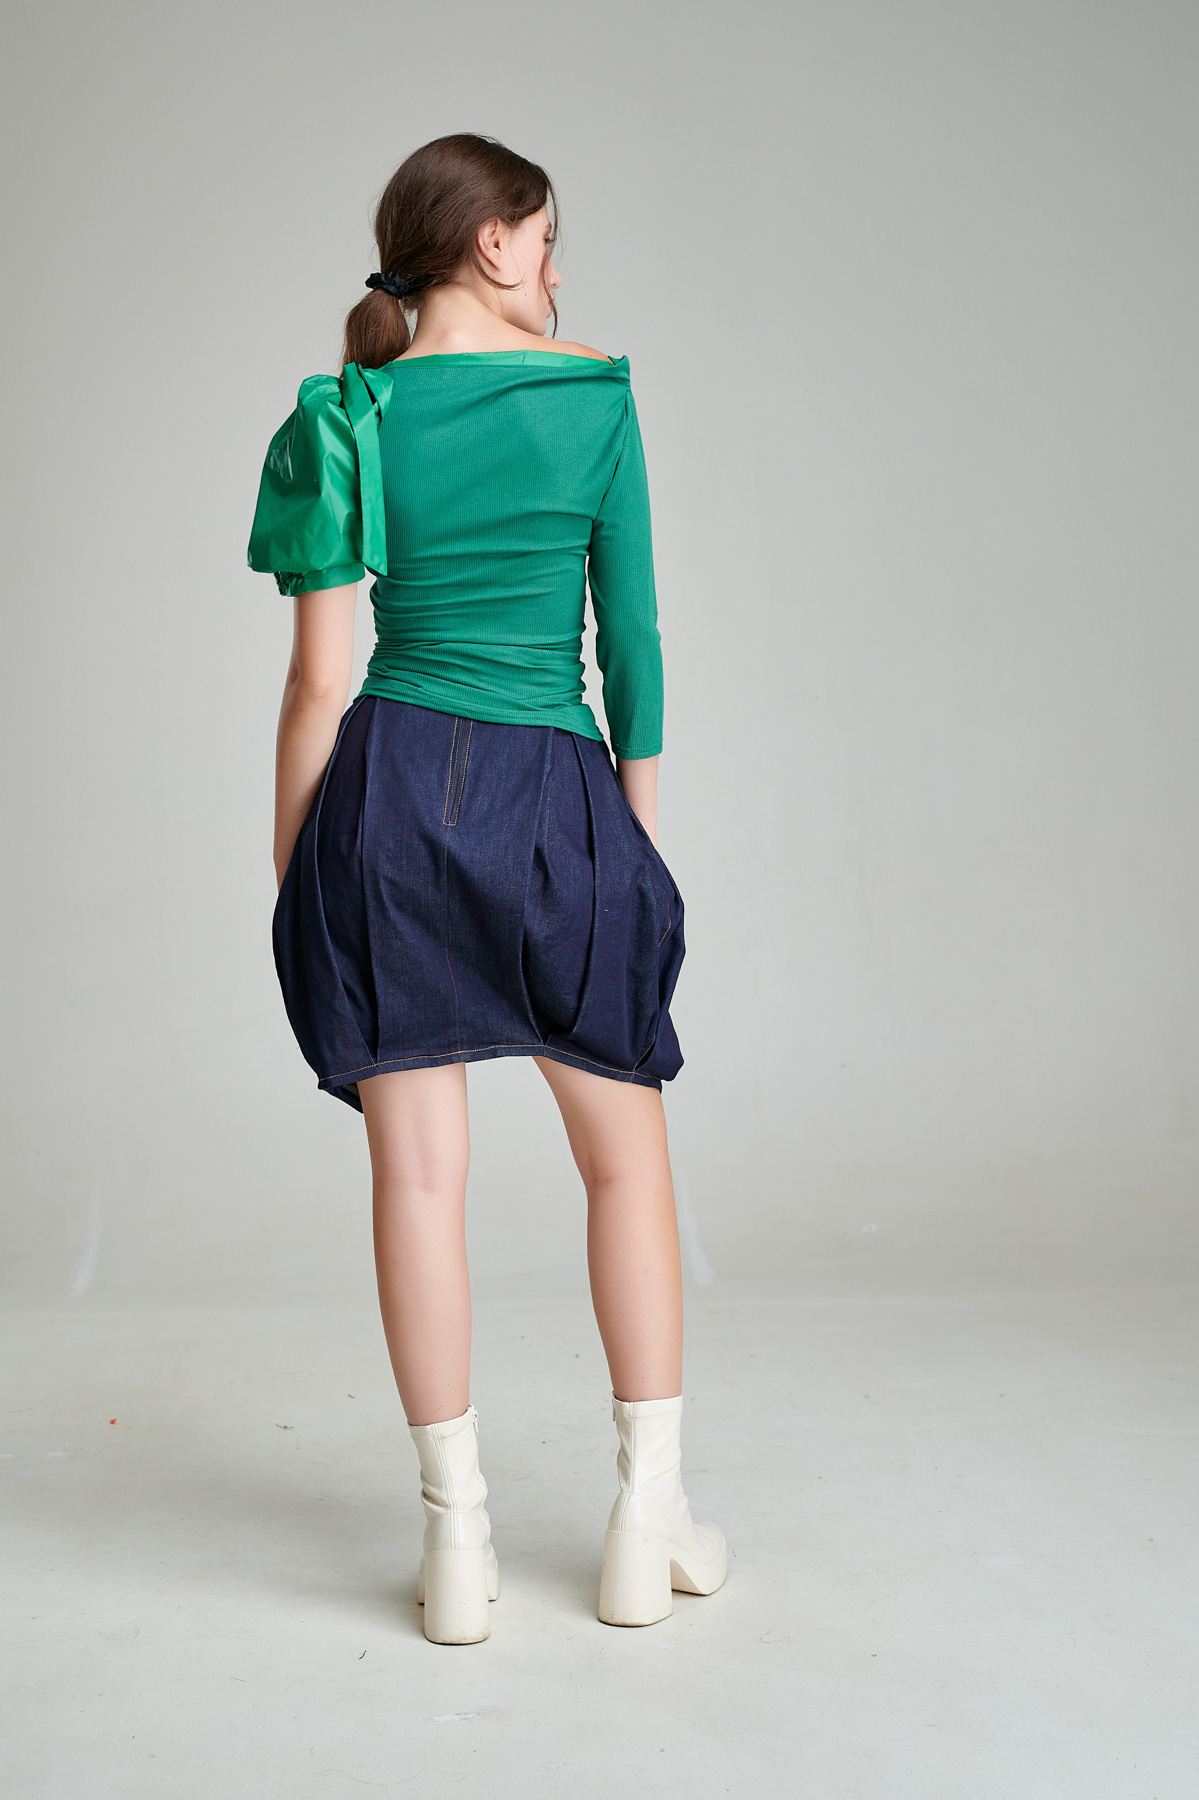 ELLA casual asymmetric emerald green blouse. Natural fabrics, original design, handmade embroidery